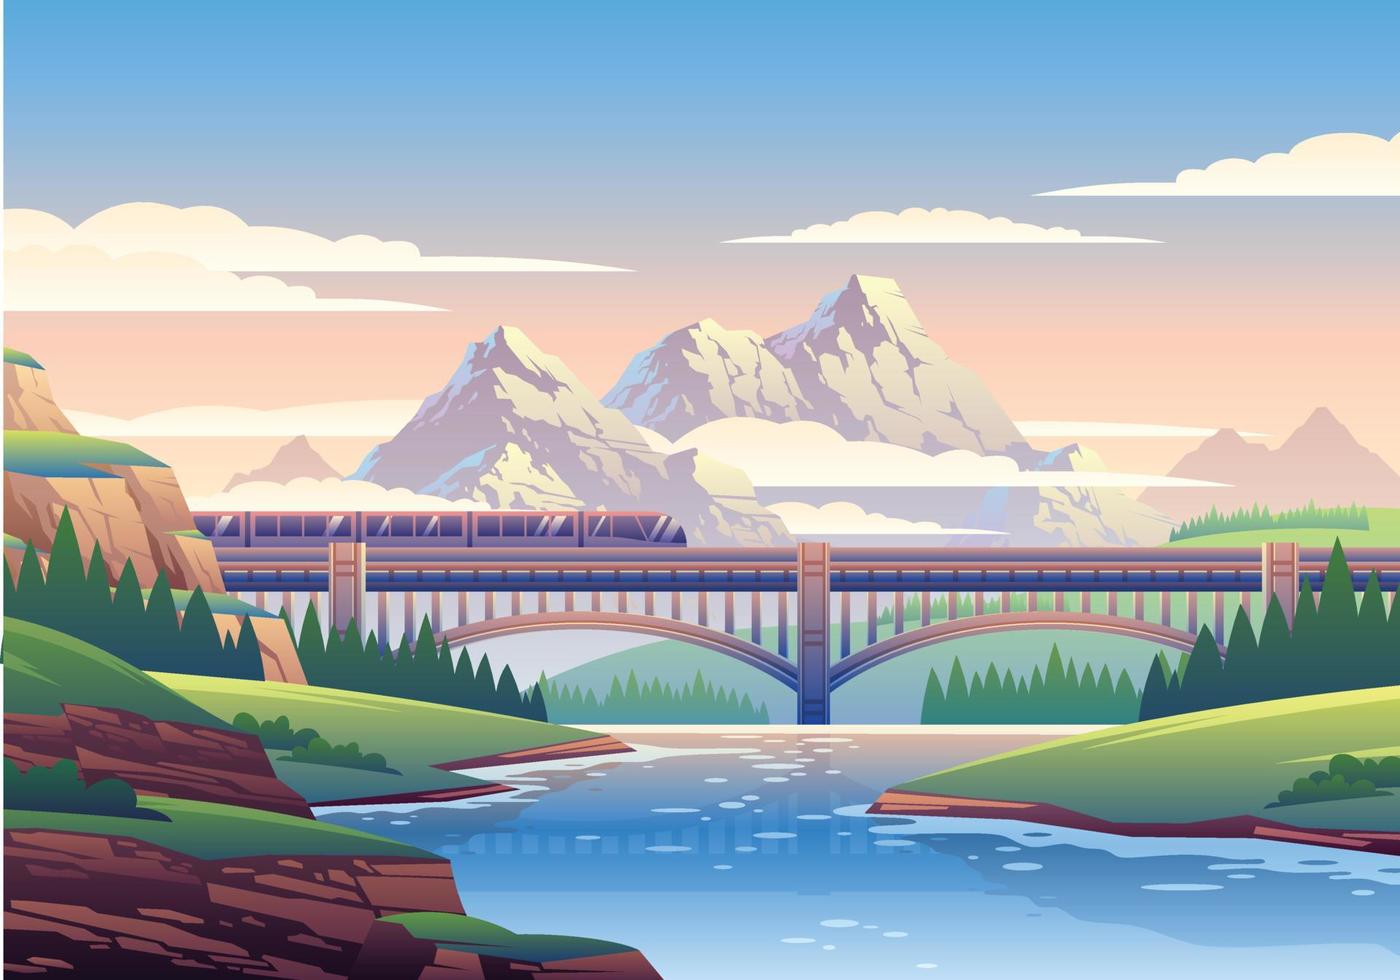 Bridge And Mountains Landscape Illustration vector